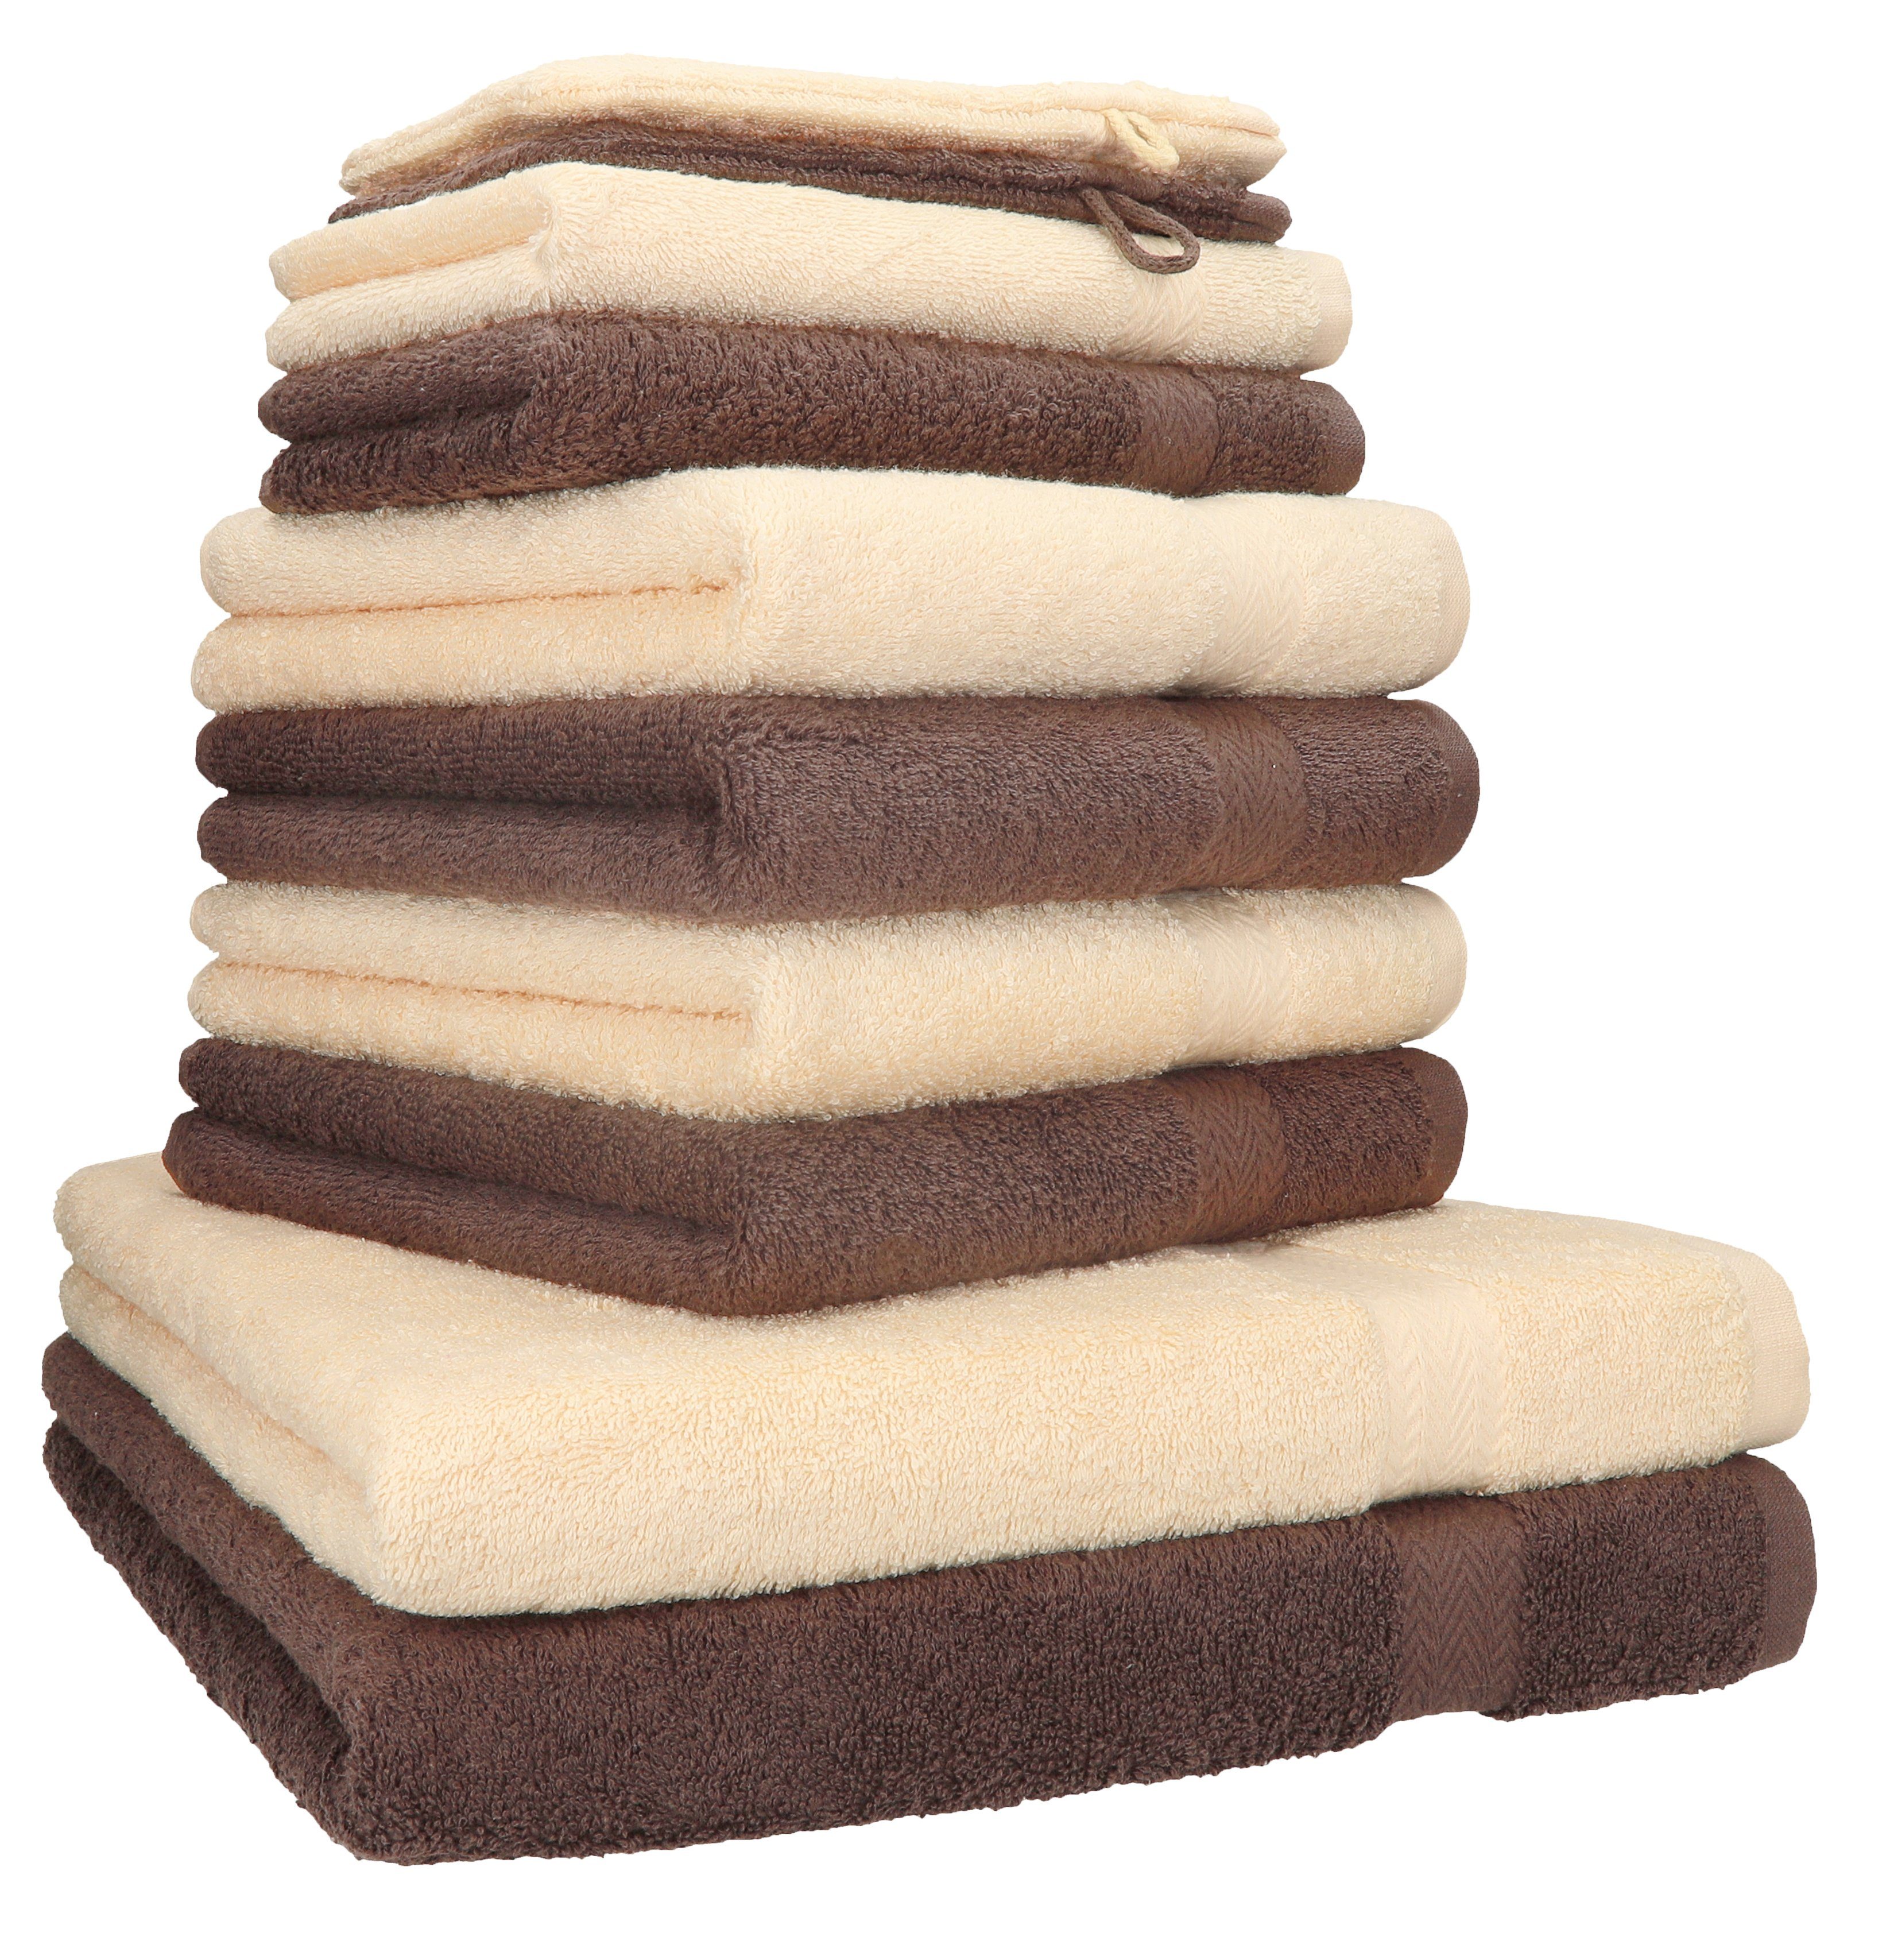 Betz Handtuch Set 10-TLG. Handtuch-Set Premium 100% Baumwolle 2 Duschtücher  4 Handtücher 2 Gästetücher 2 Waschhandschuhe Farbe Nuss Braun & Beige, 100%  Baumwolle, (10-tlg)